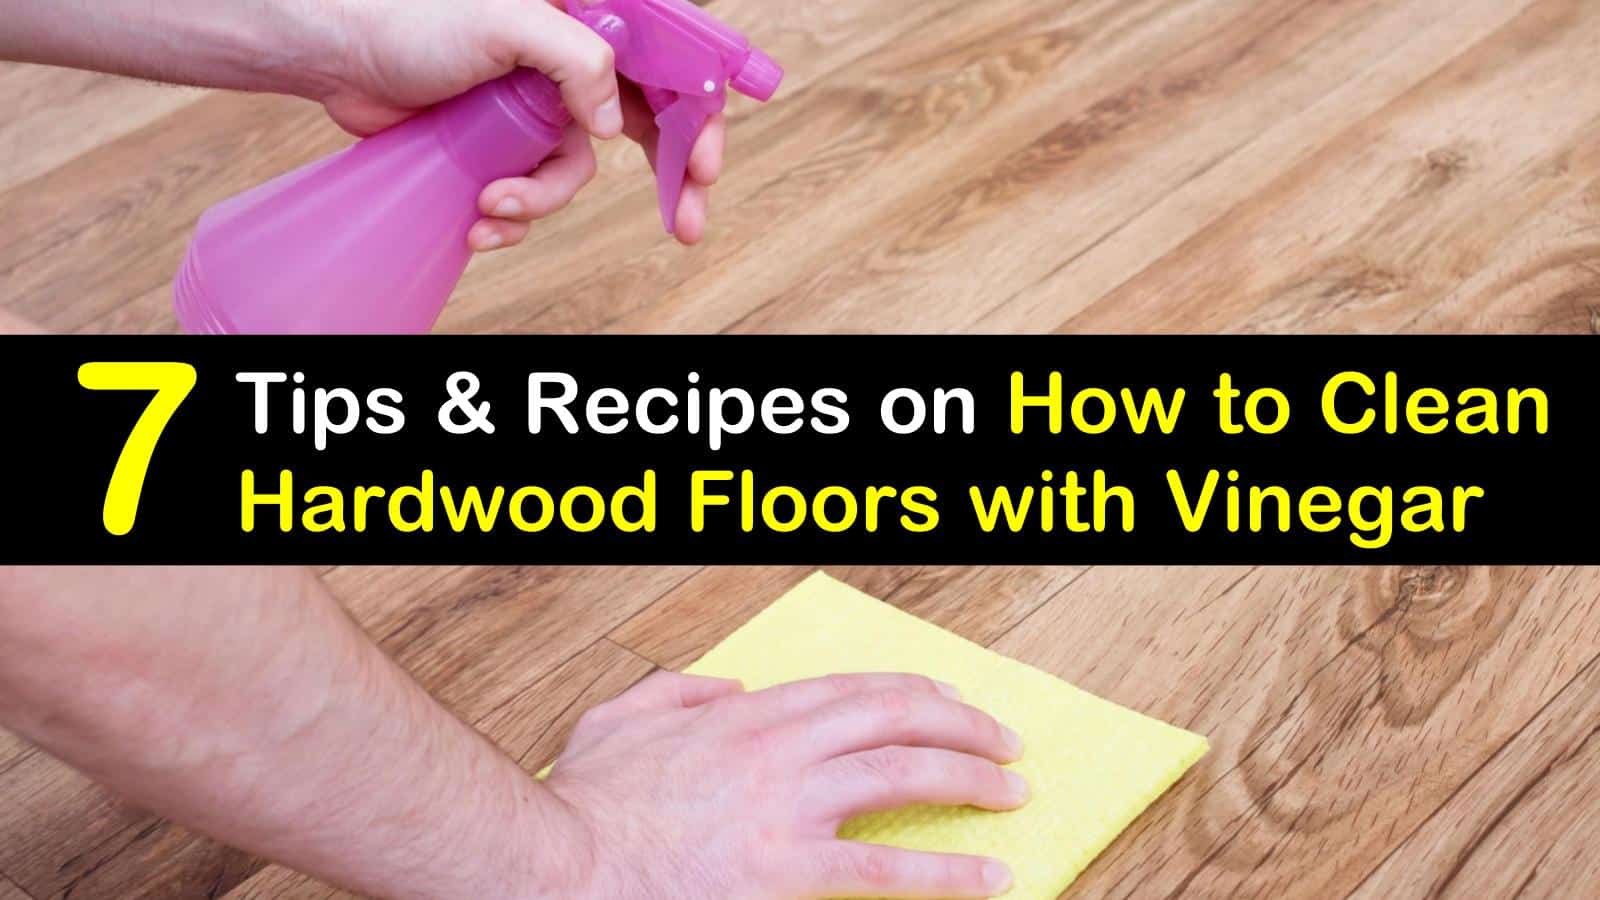 Clean Hardwood Floors With Vinegar, How To Treat Hardwood Floors